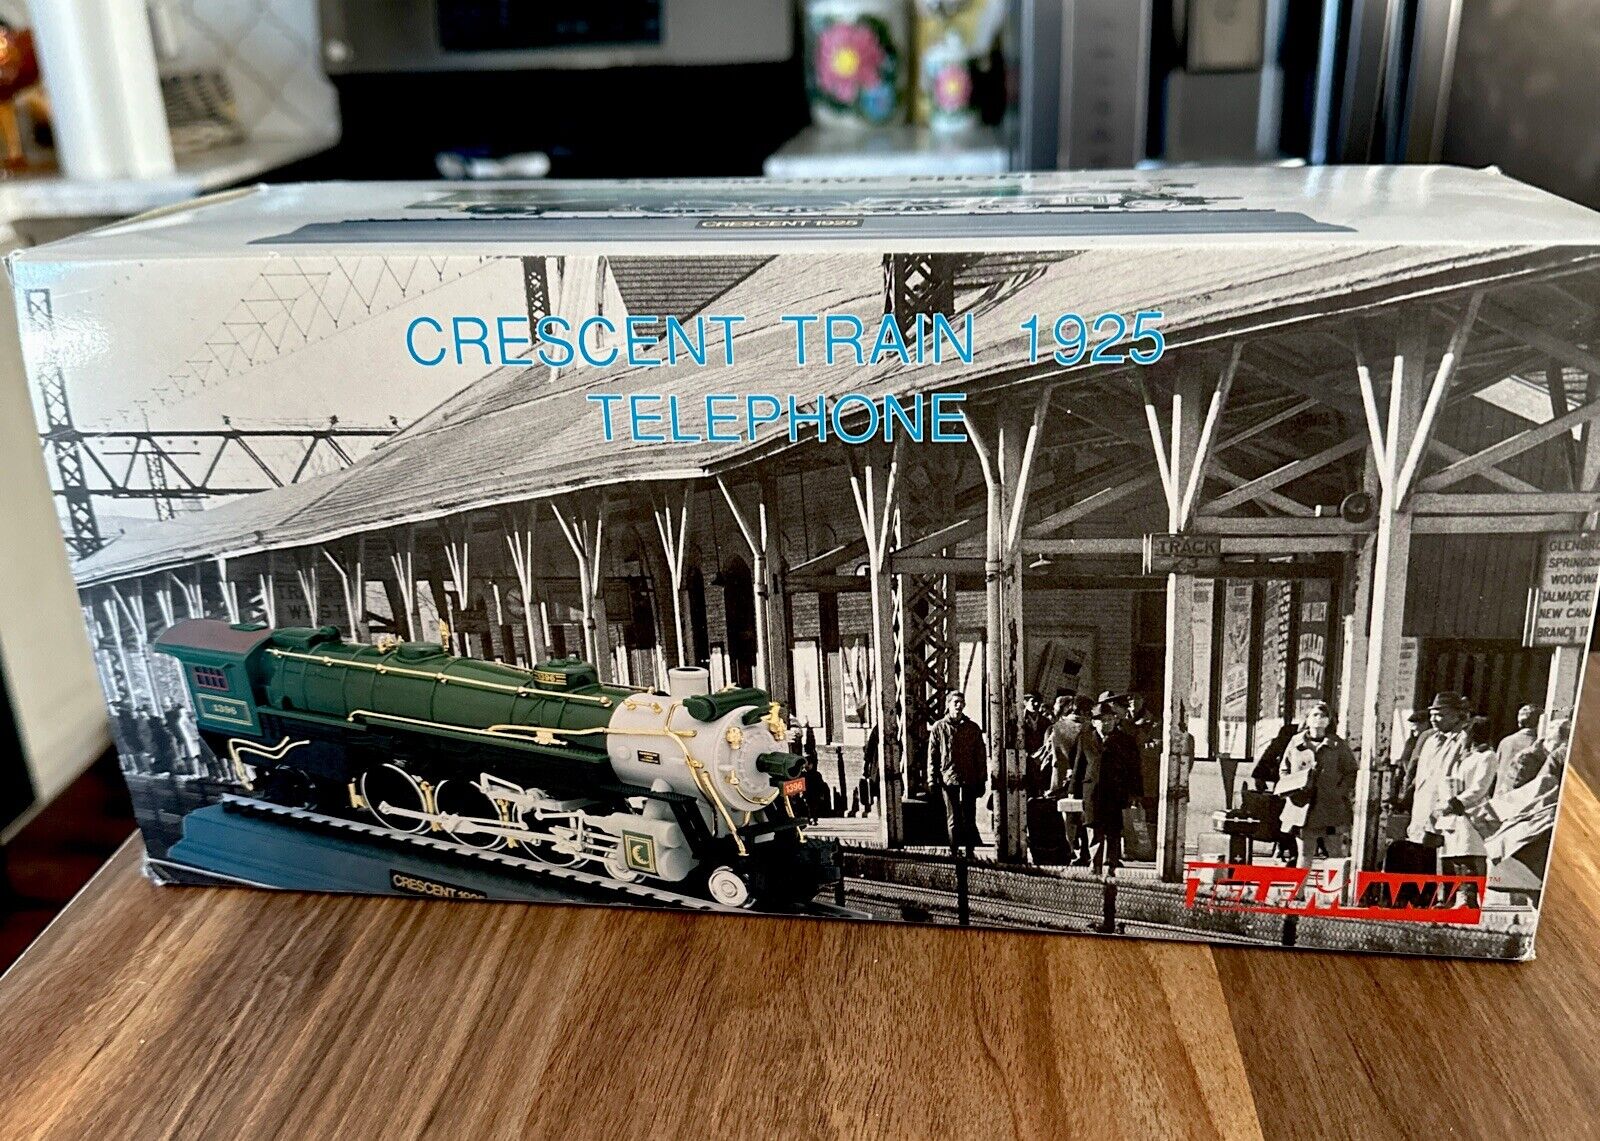 Vintage Telemania Crescent Train 1925 Locomotive Telephone Phone Original Box